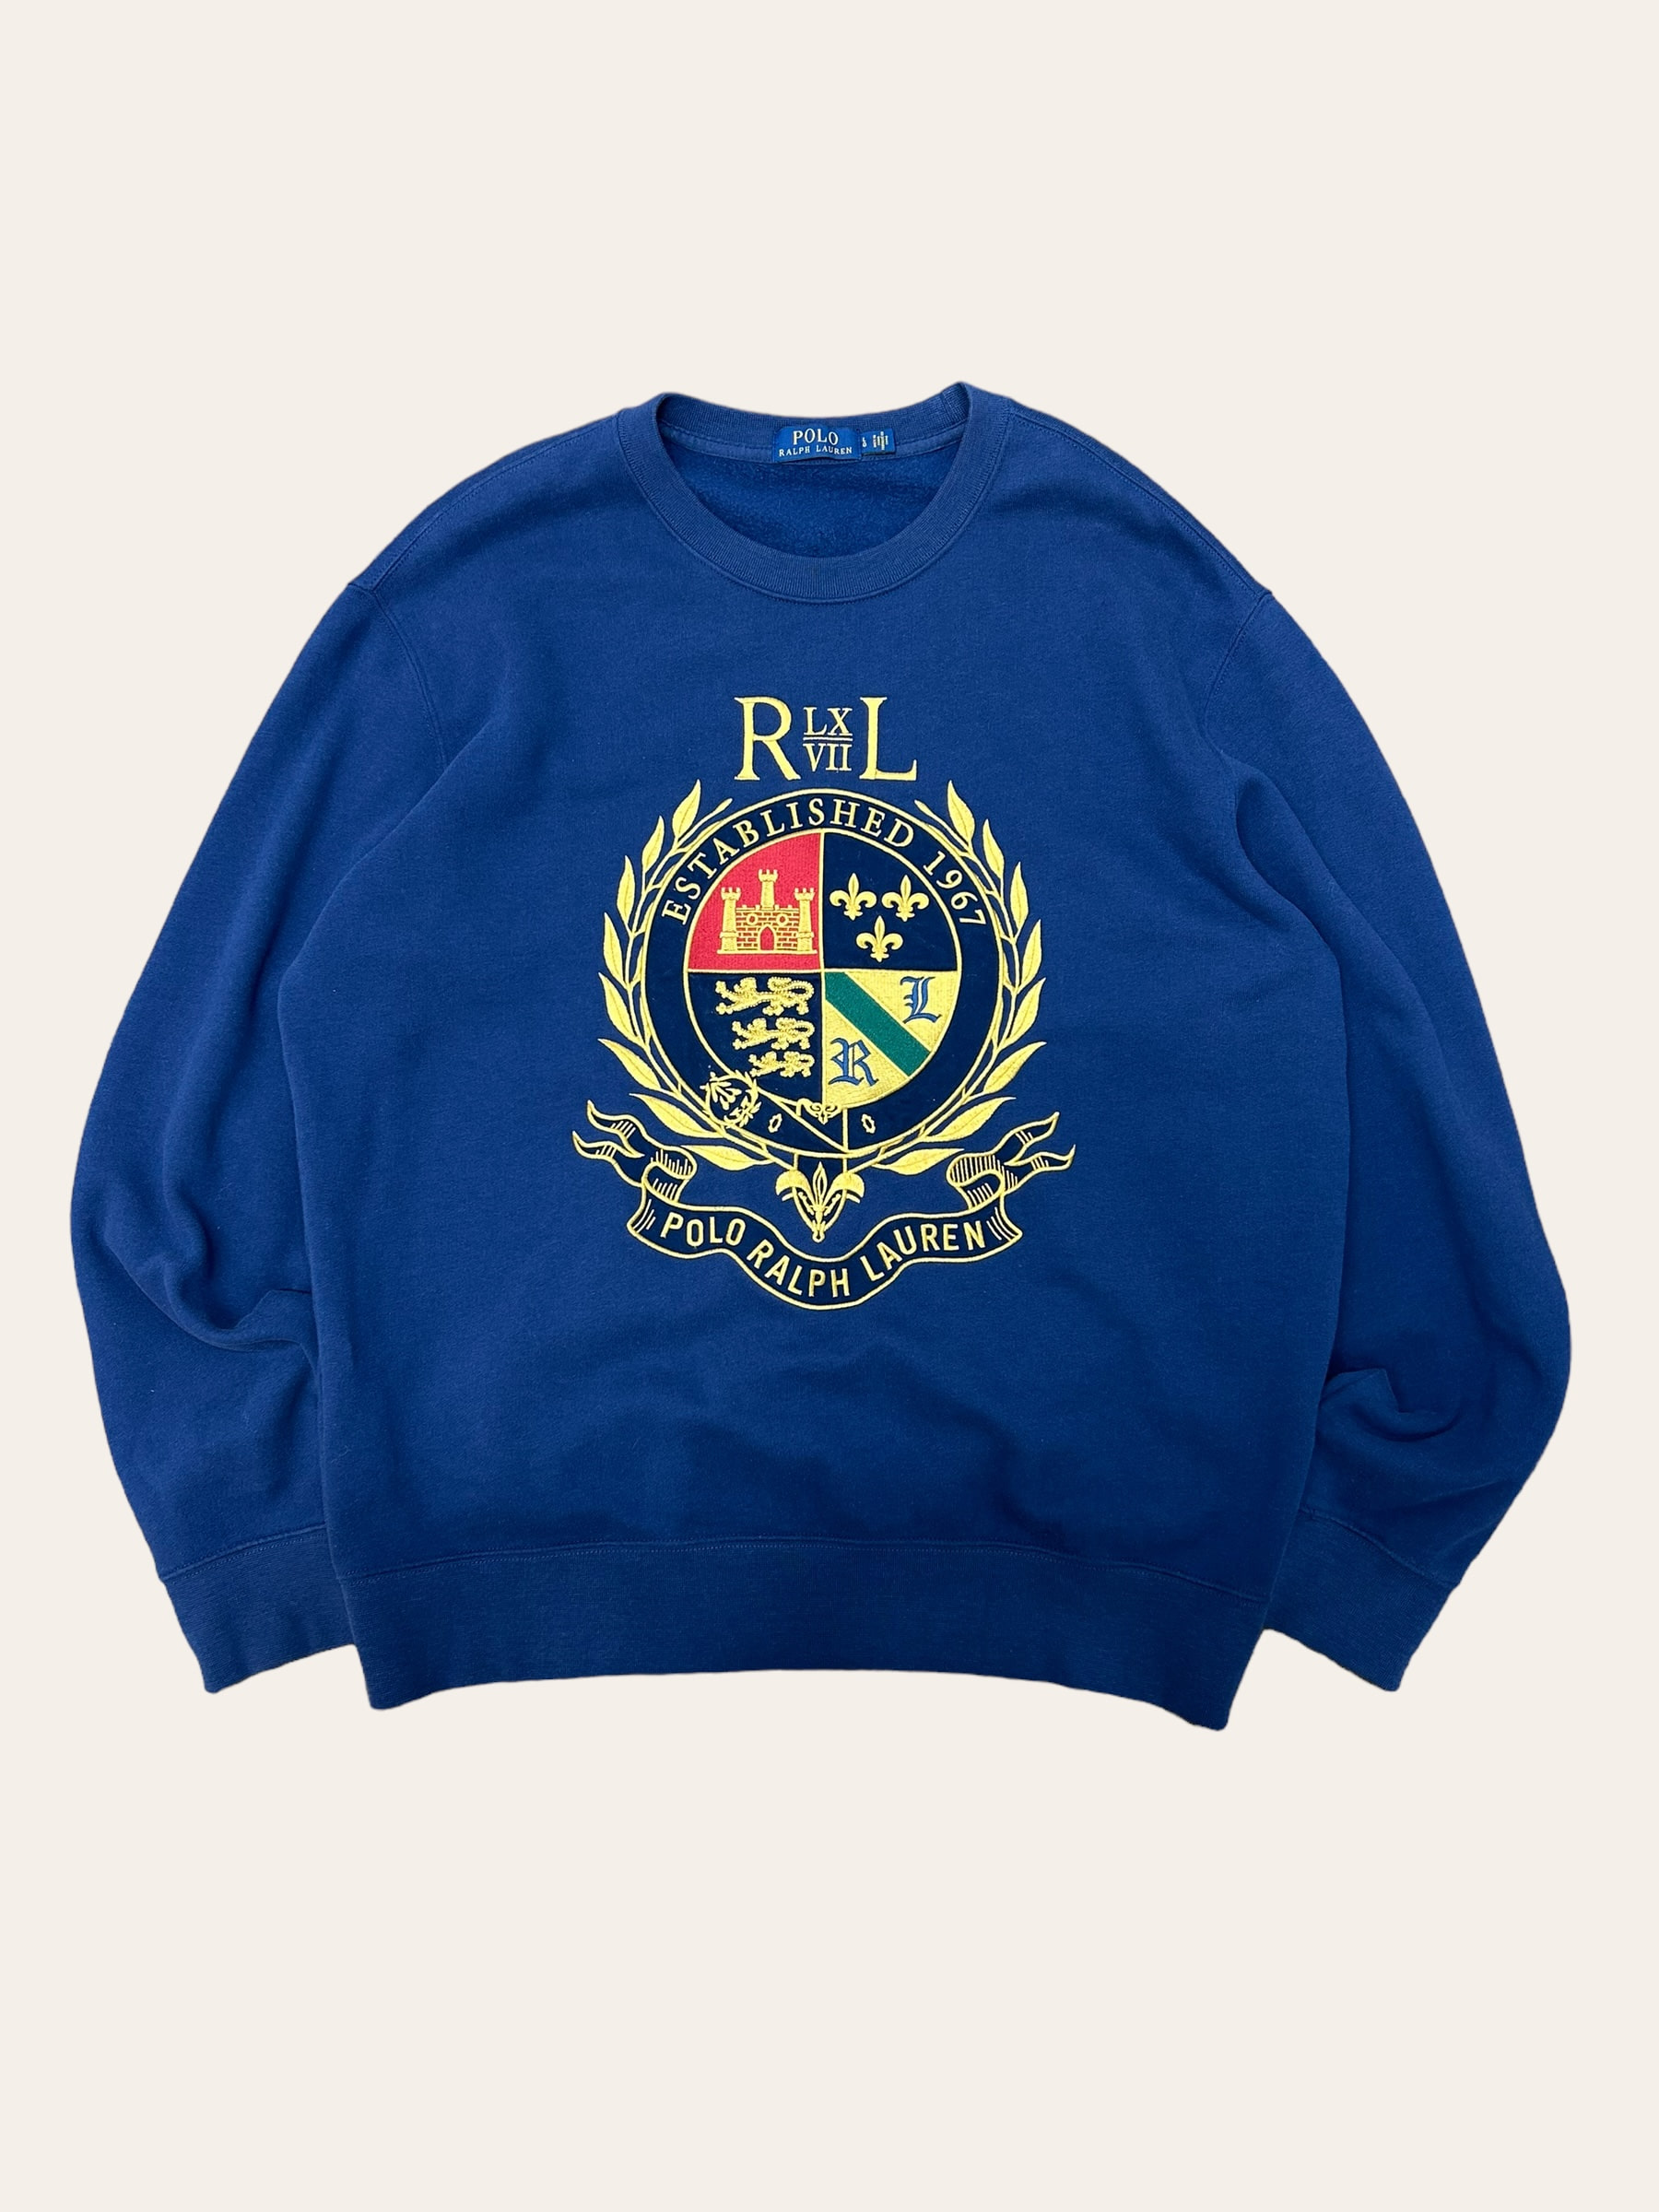 Polo ralph lauren navy crest embroidered sweatshirt L